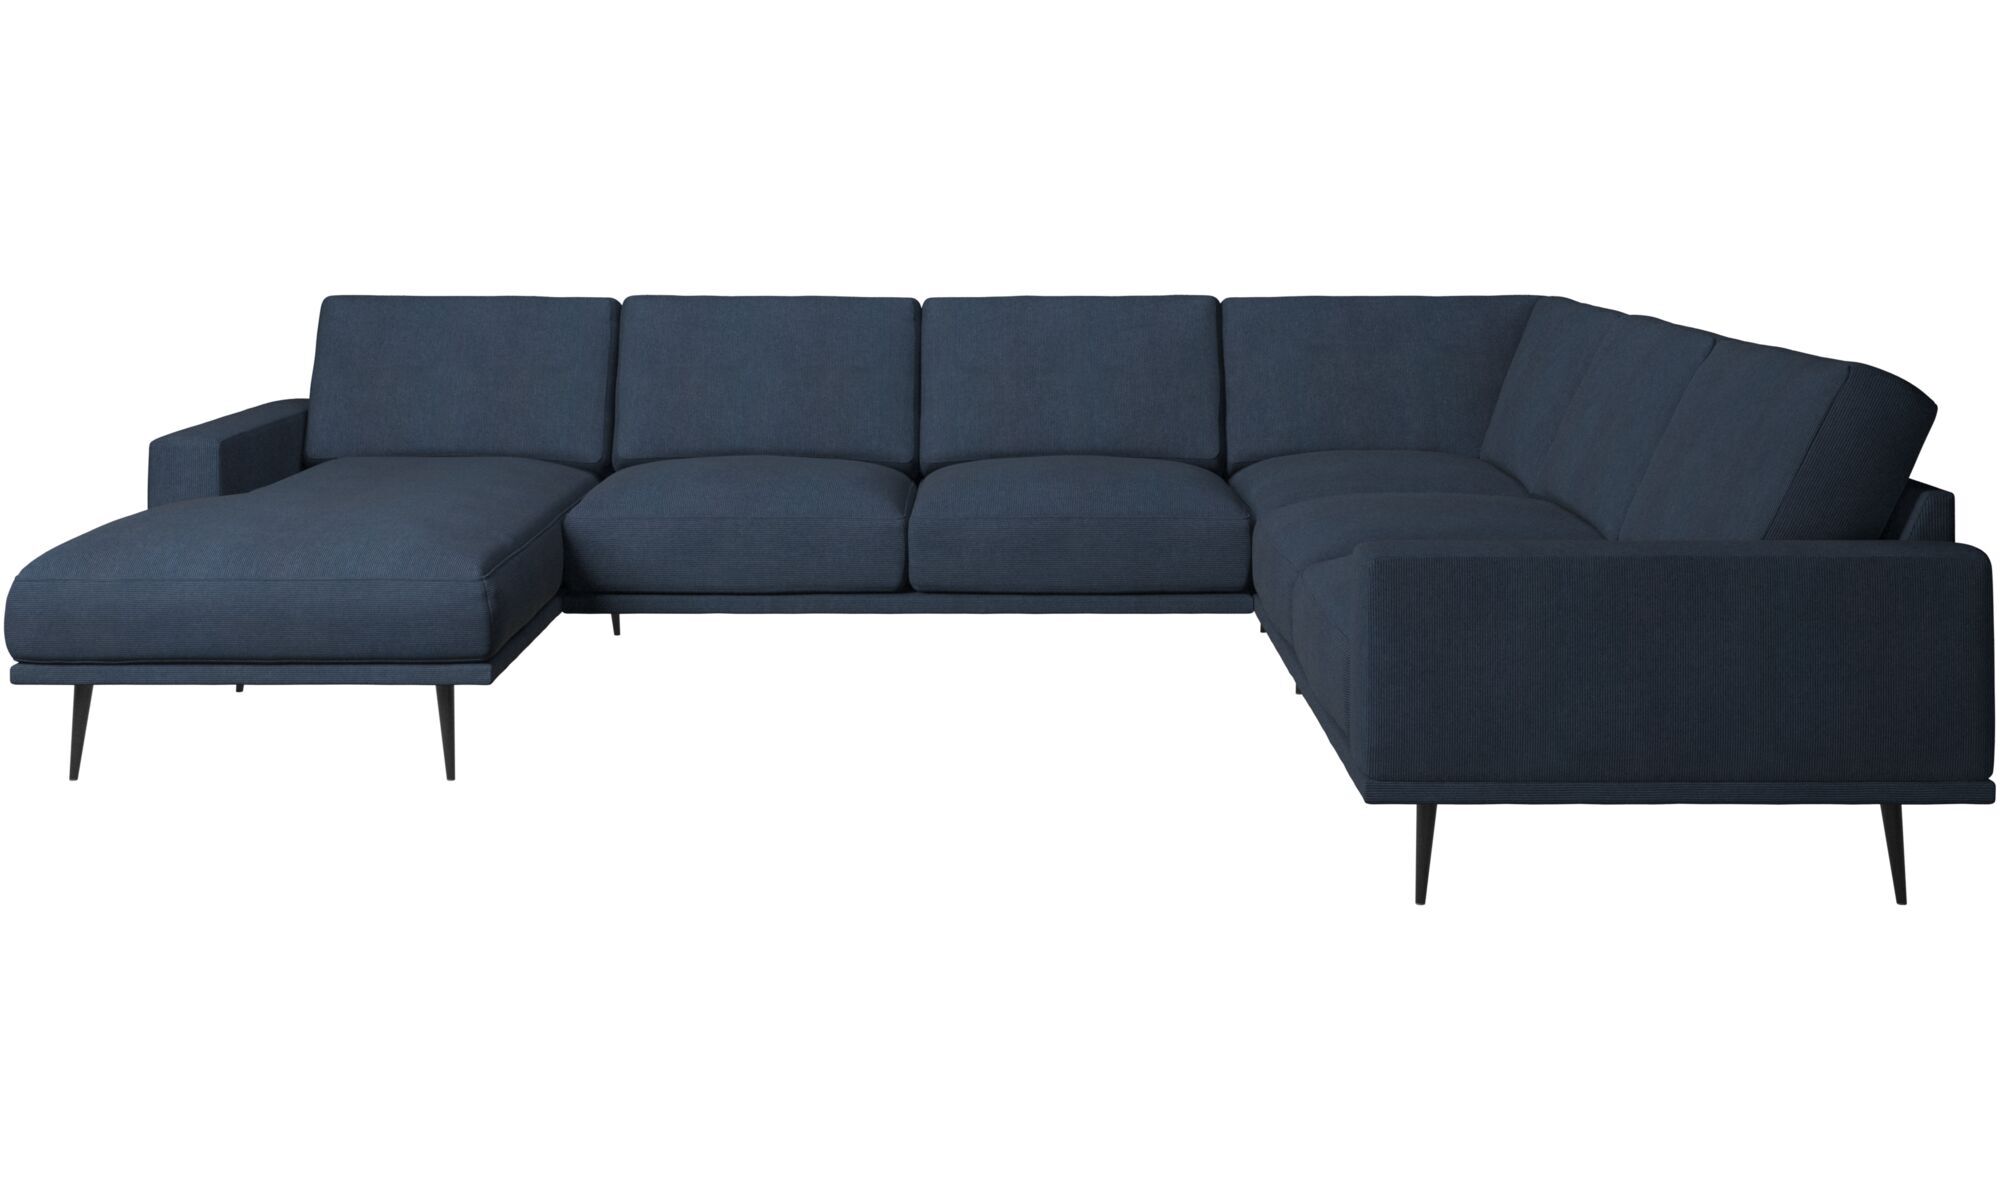 Угловой диван Carlton с модулем для отдыха - Skagen 3163 Темно-синяя ткань